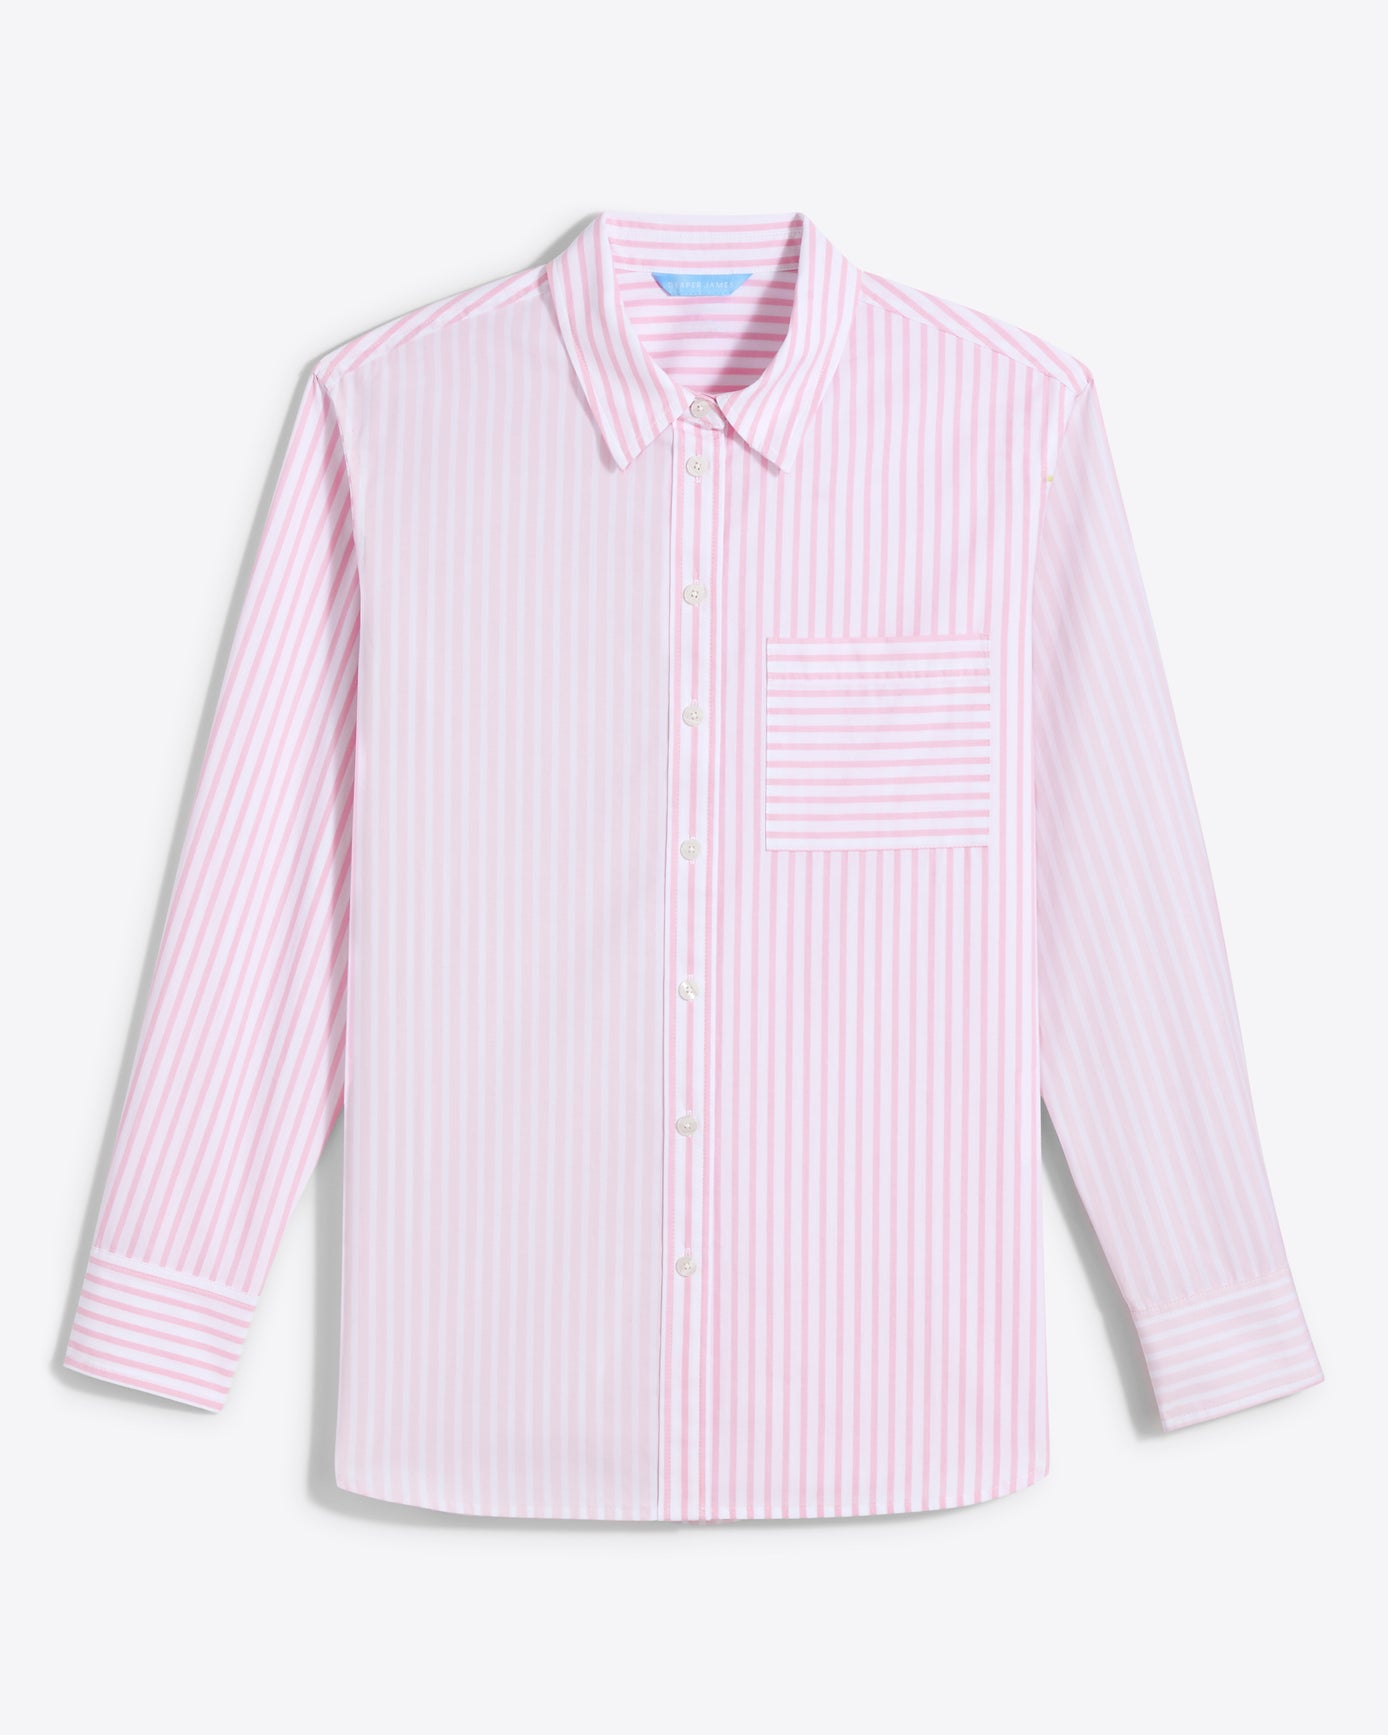 Lynn Long Sleeve Top in Pink Mixed Stripe